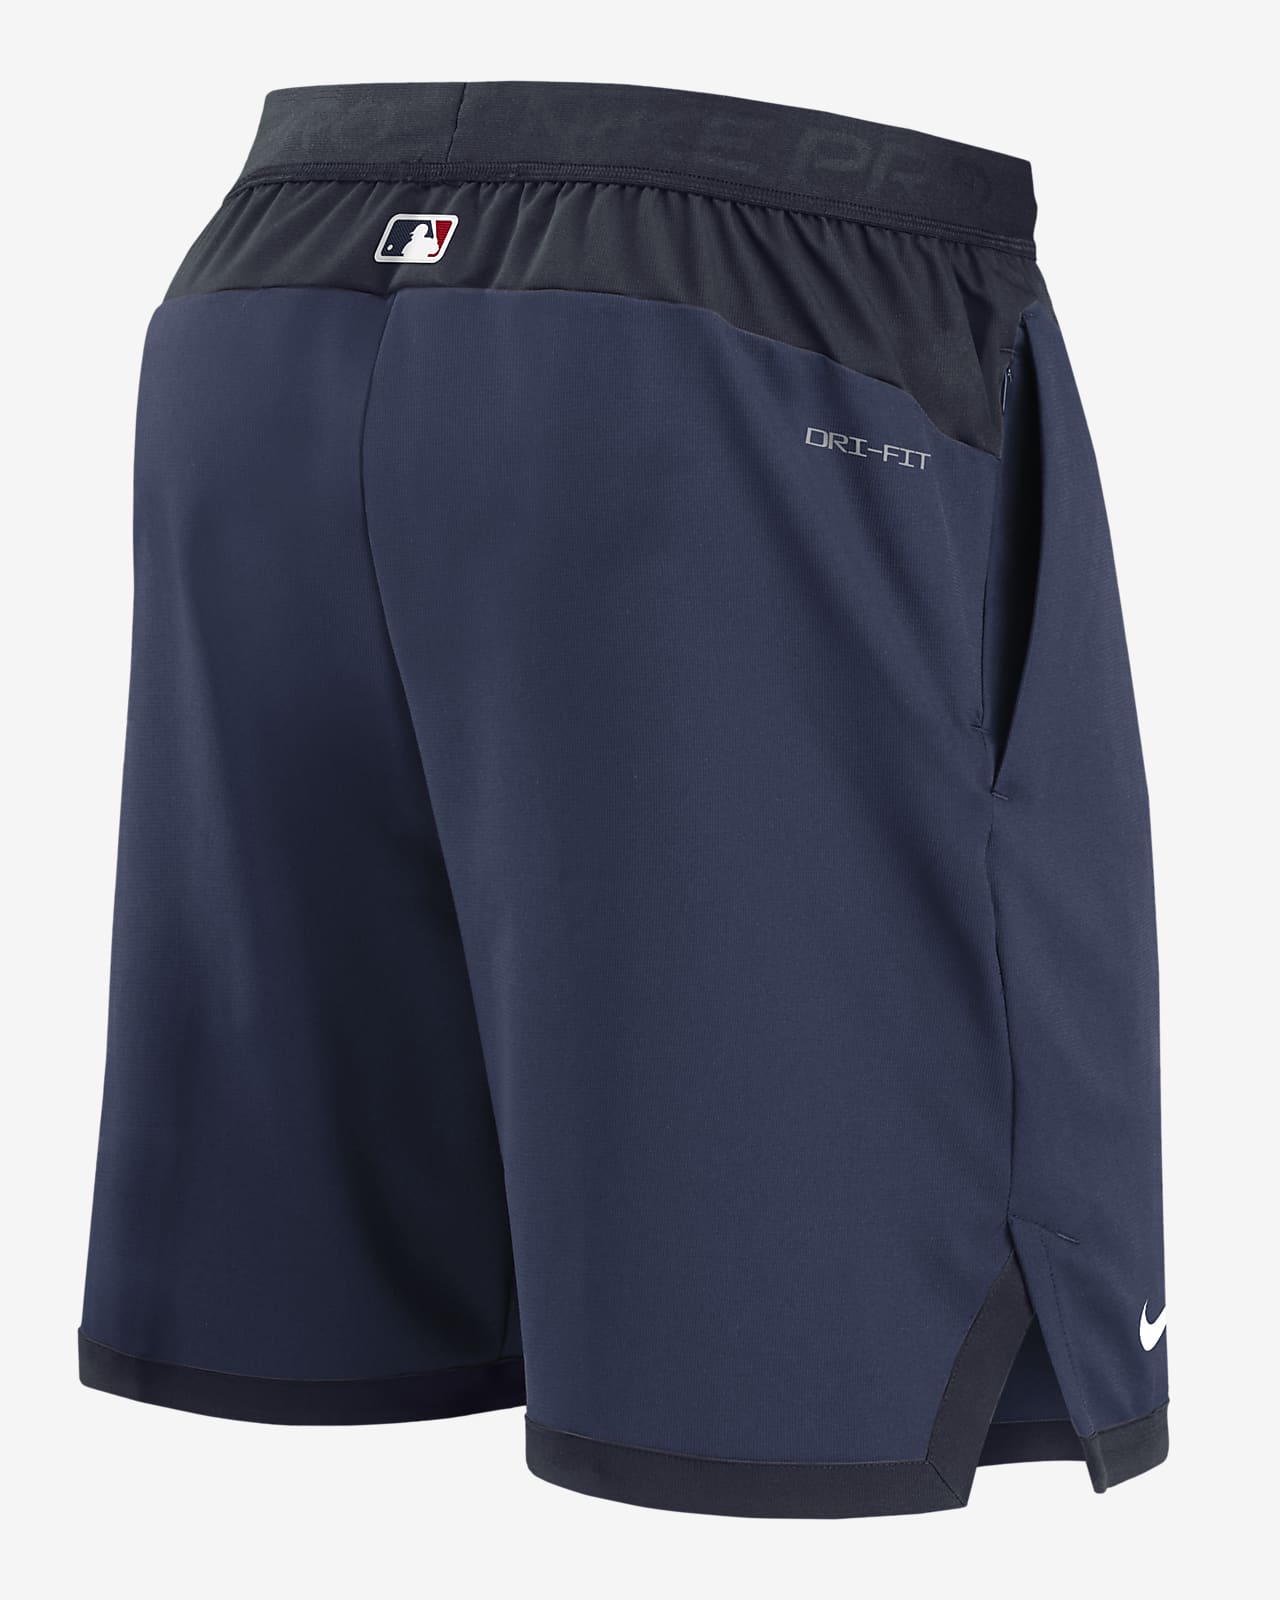 Nike Dri-FIT Flex (MLB Boston Red Sox) Men's Shorts.